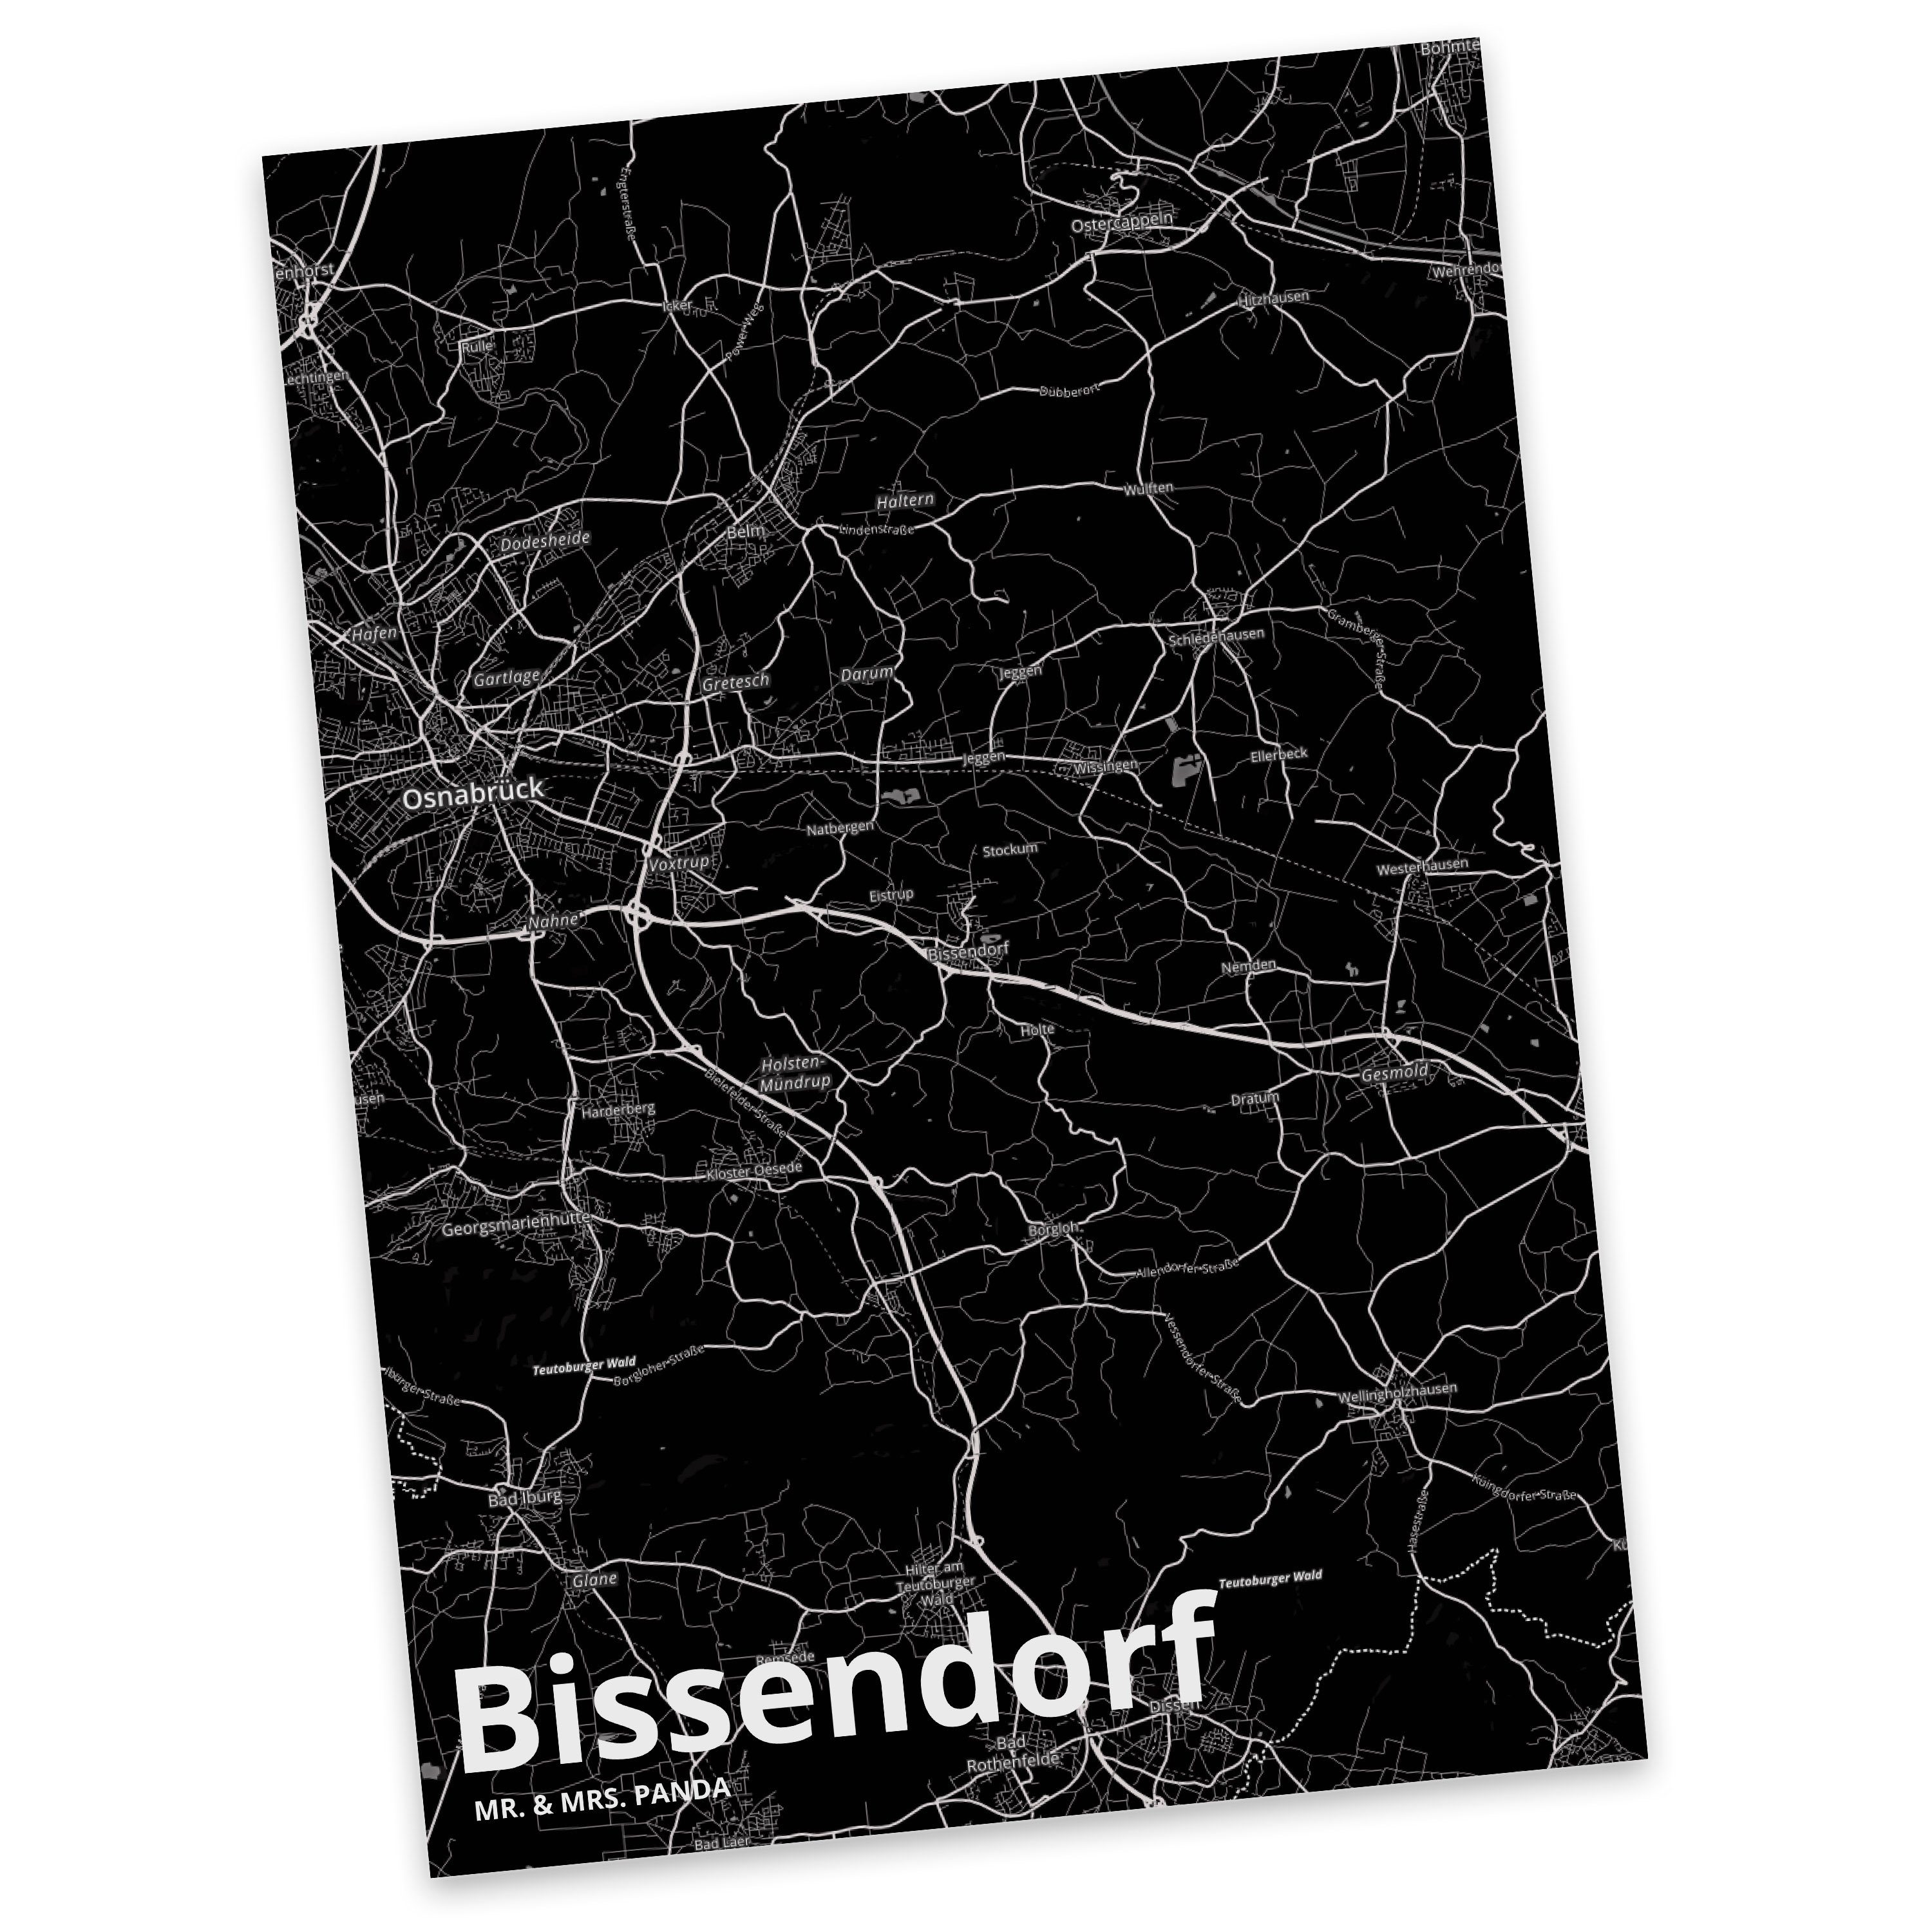 Mr. & Mrs. Panda Postkarte Bissendorf - Geschenk, Stadt, Städte, Ort, Geburtstagskarte, Dankeska